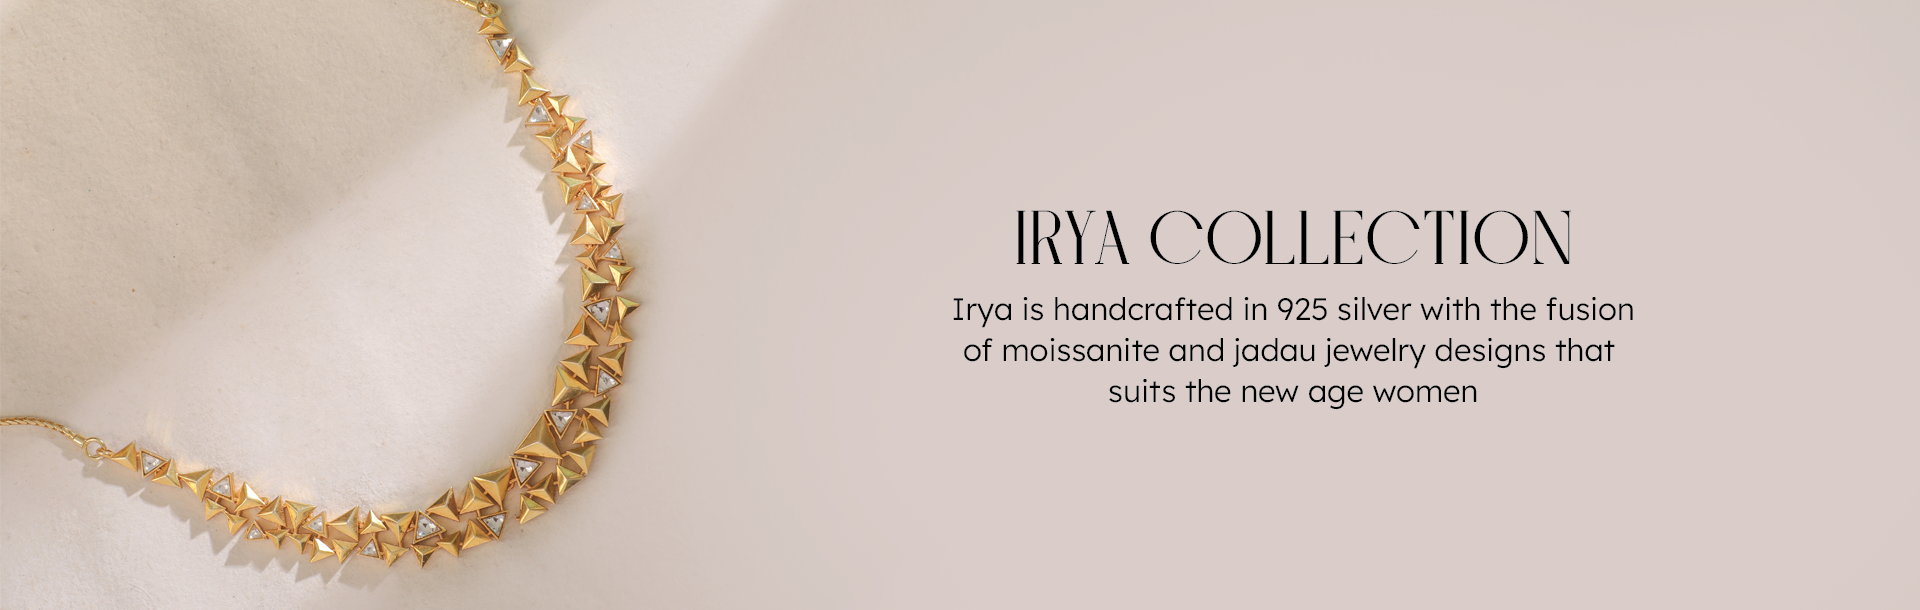 Irya Collection